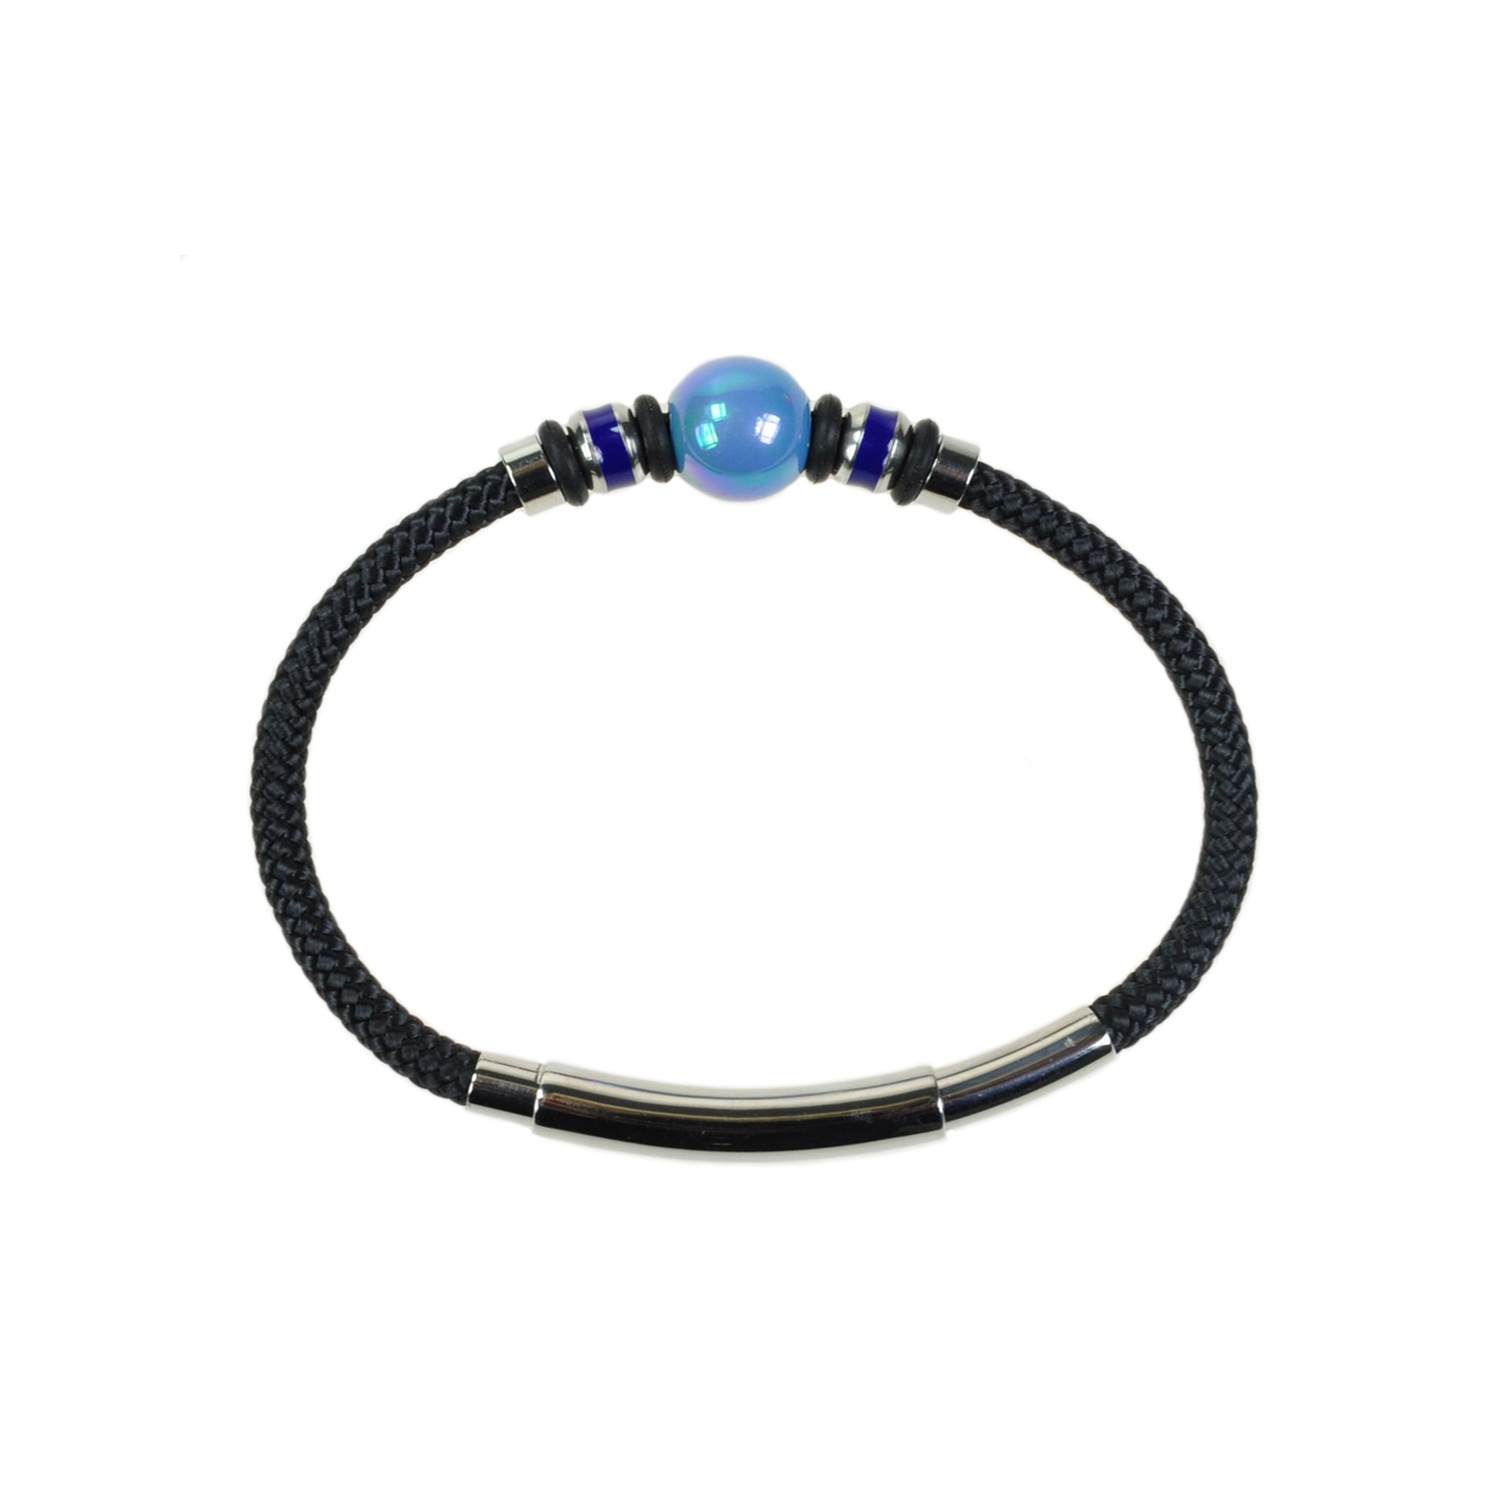 Unisex nautical cord bracelet.